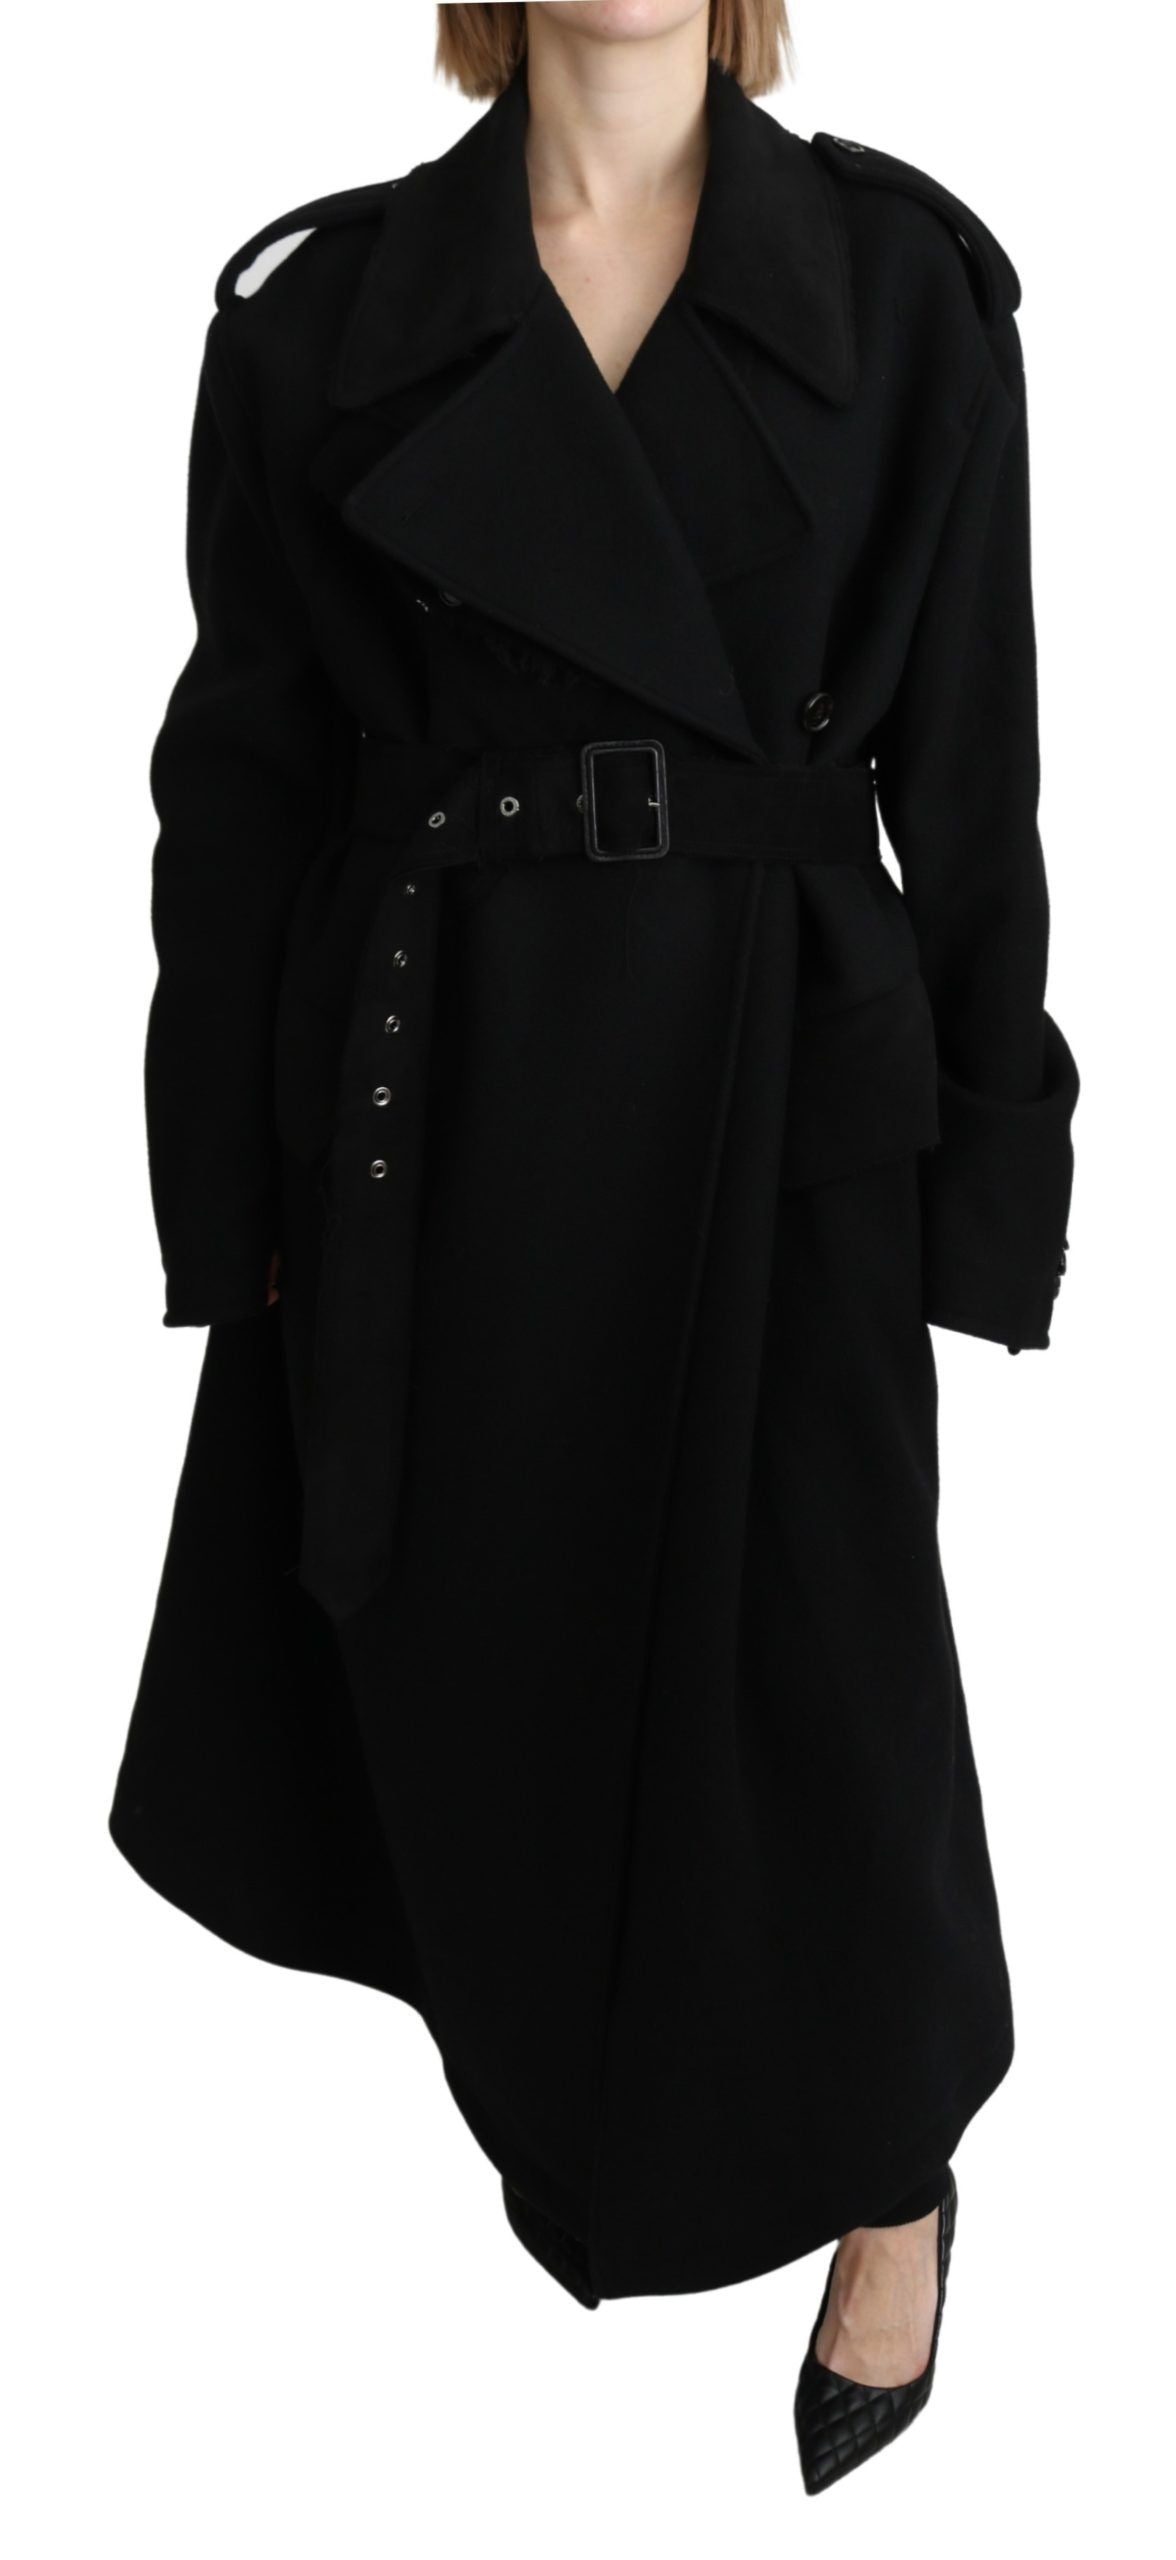 Virgin Wool Black Blazer Trenchcoat Jacket